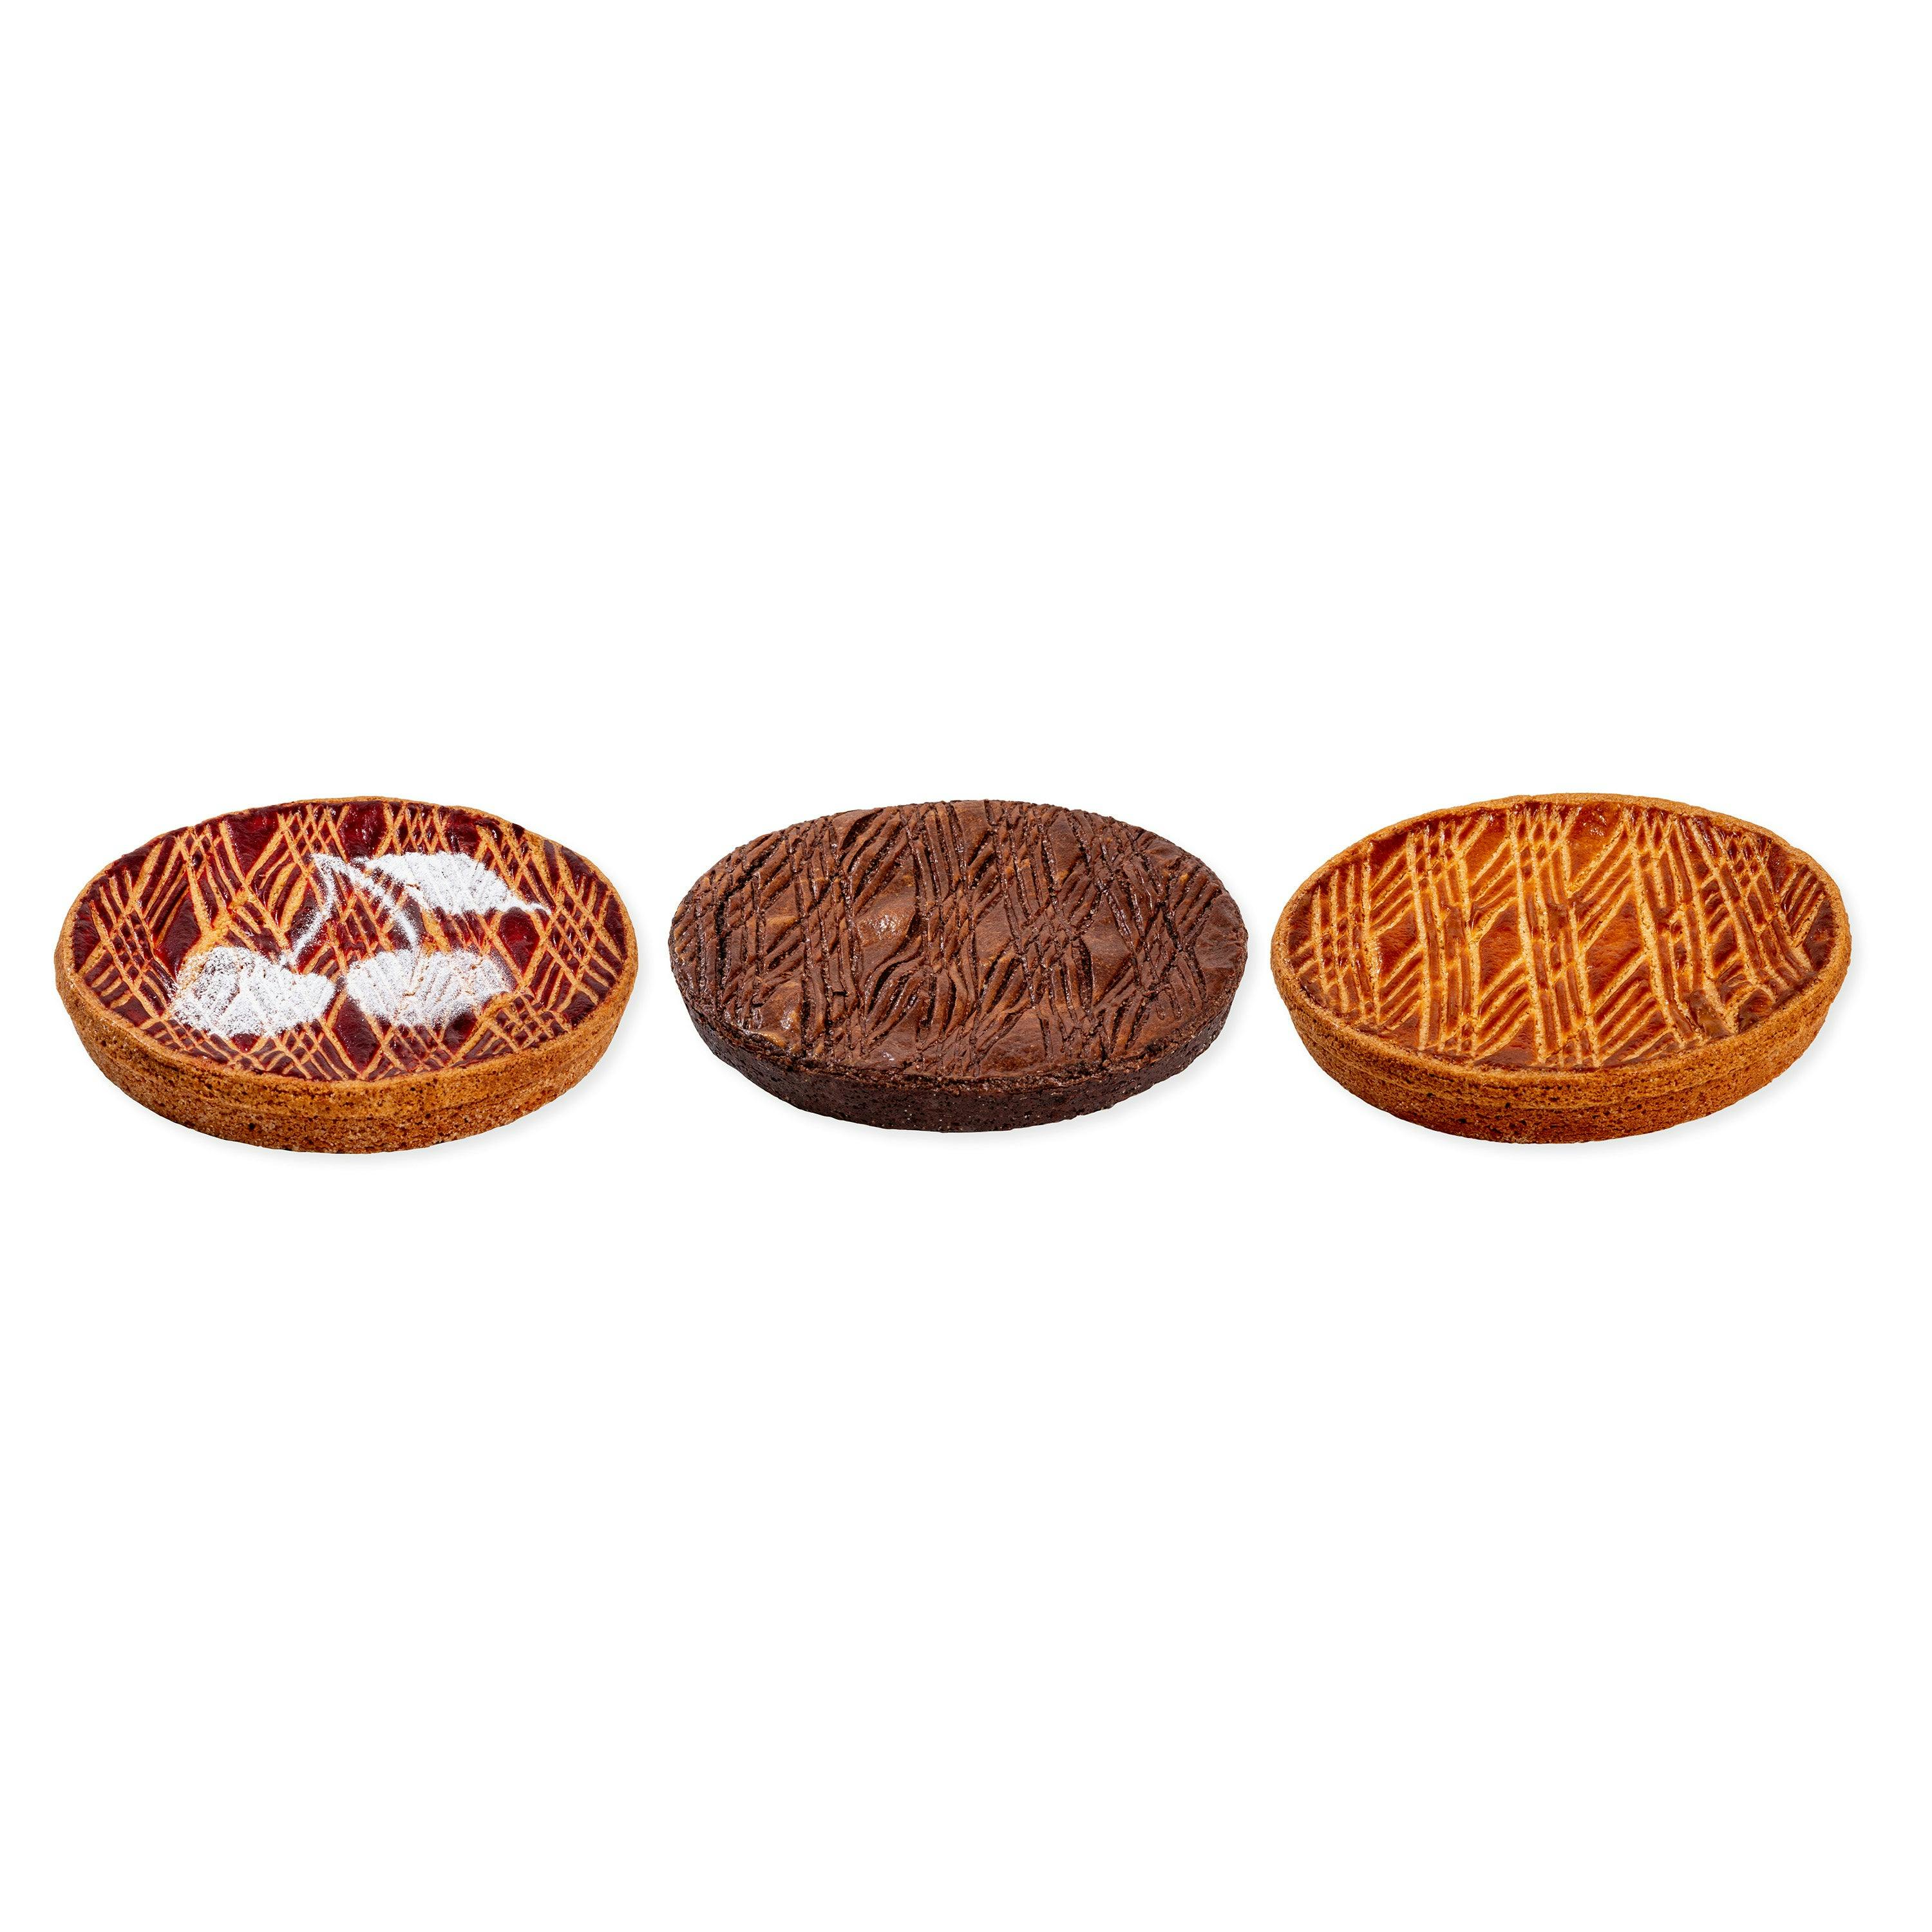 Biscuits - Vincent Vallée world champion chocolatier